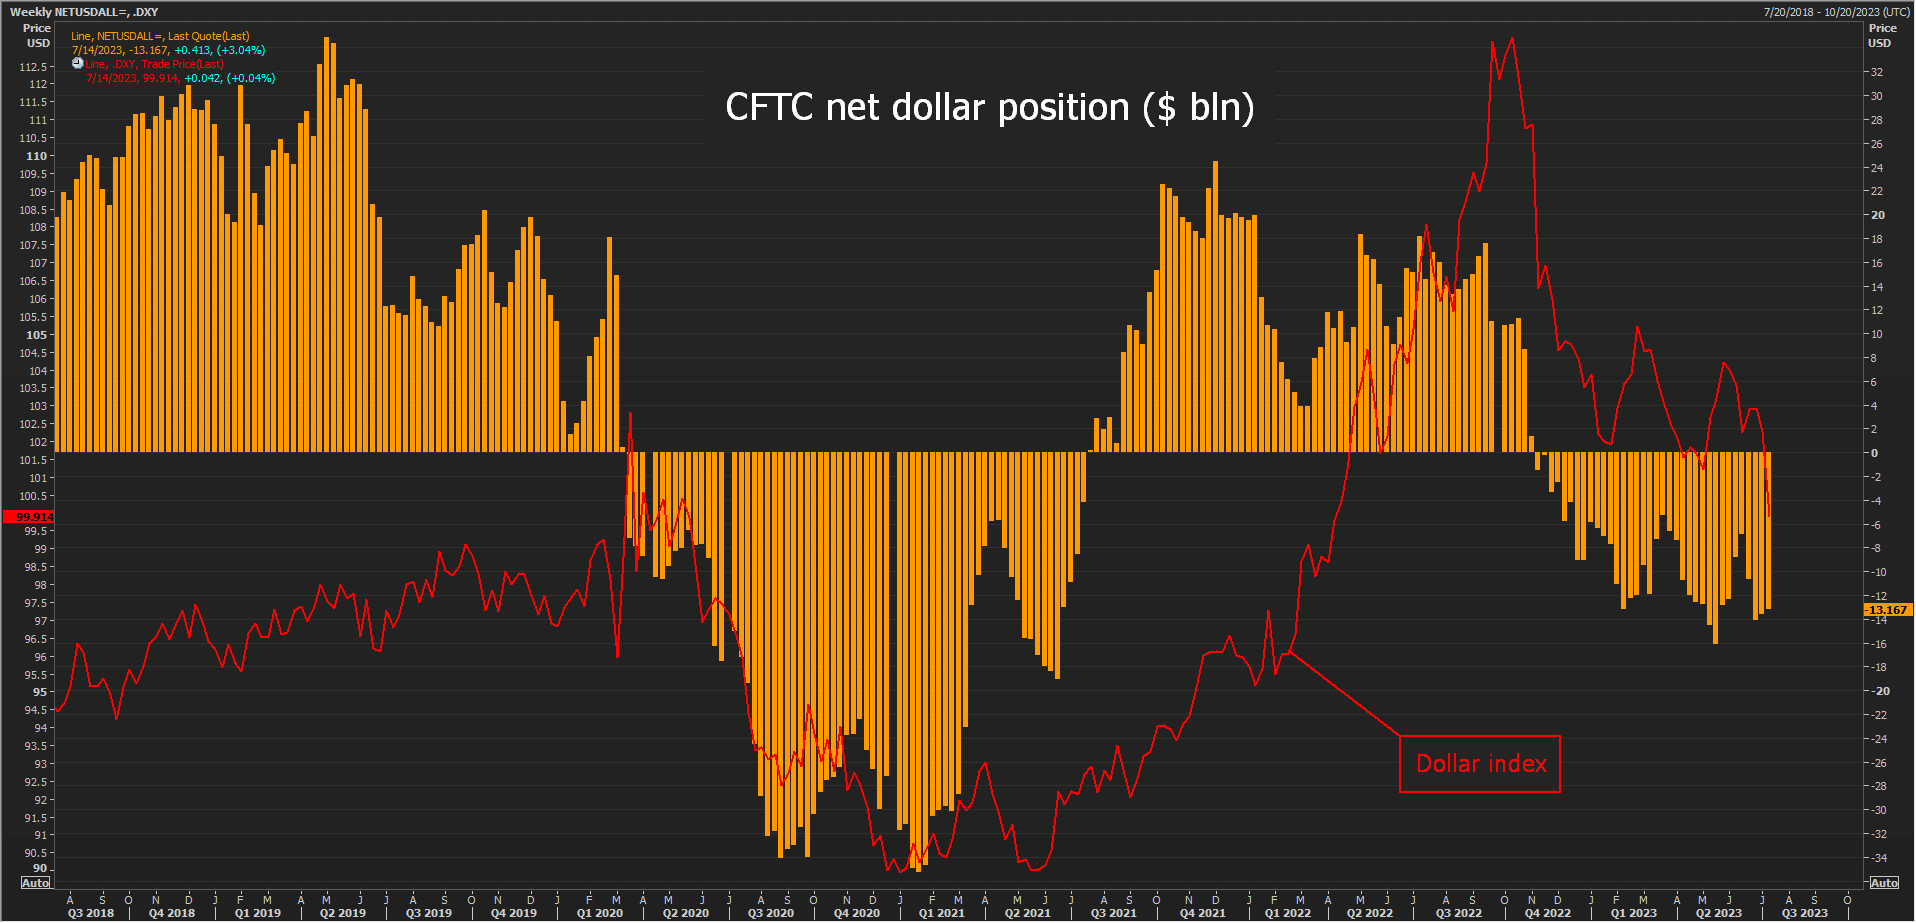 CFTC funds' net dollar position